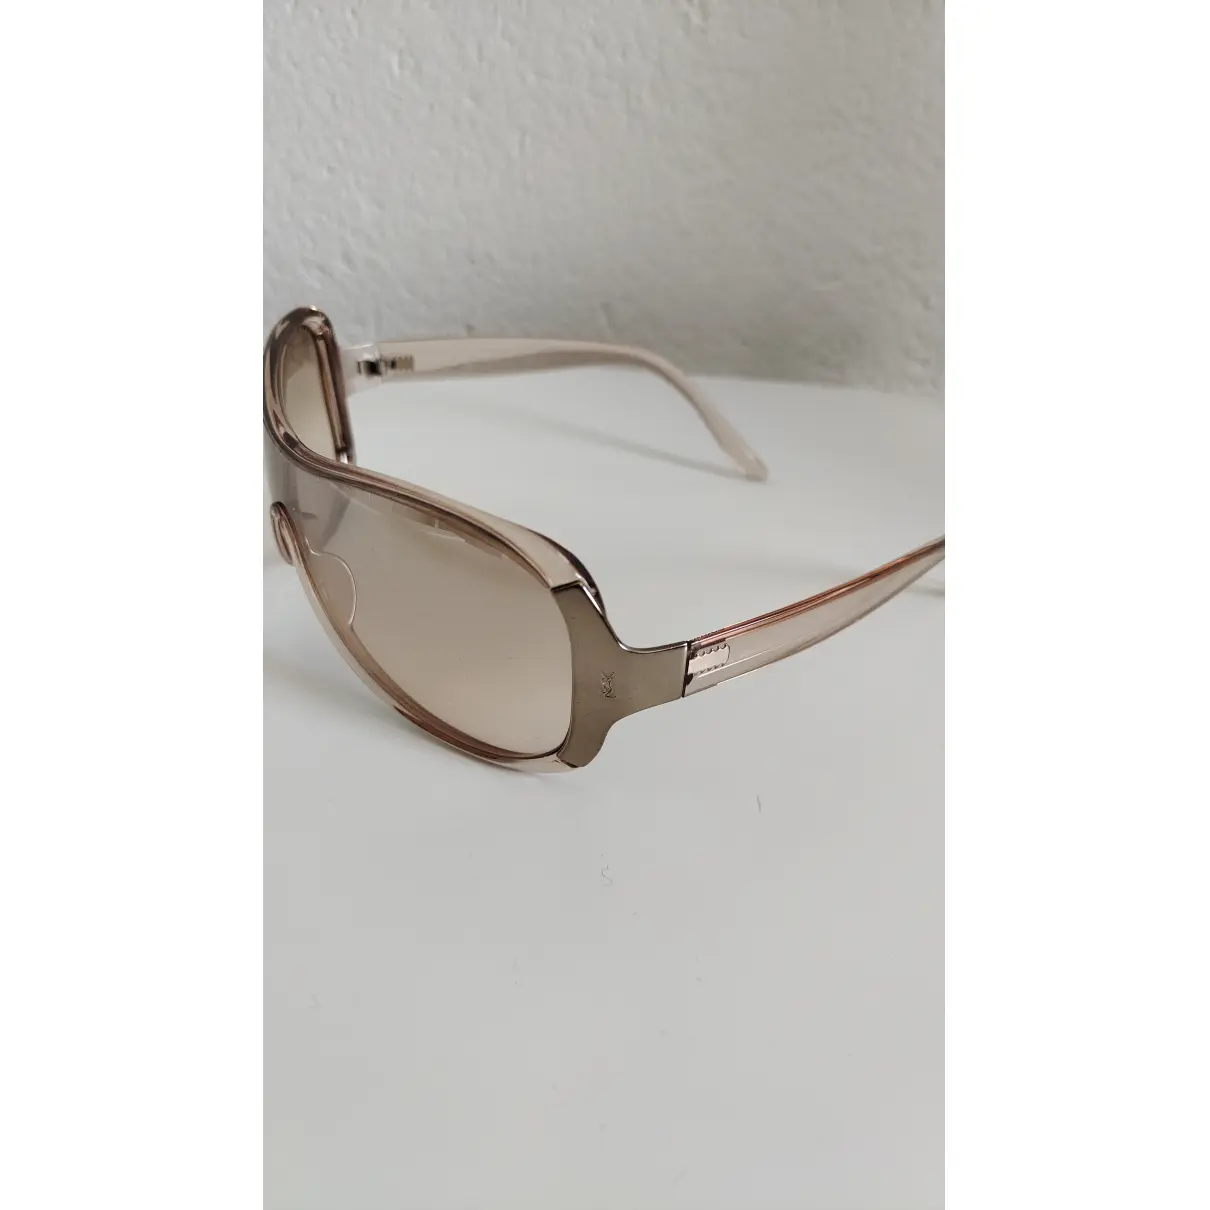 Buy Yves Saint Laurent Goggle glasses online - Vintage